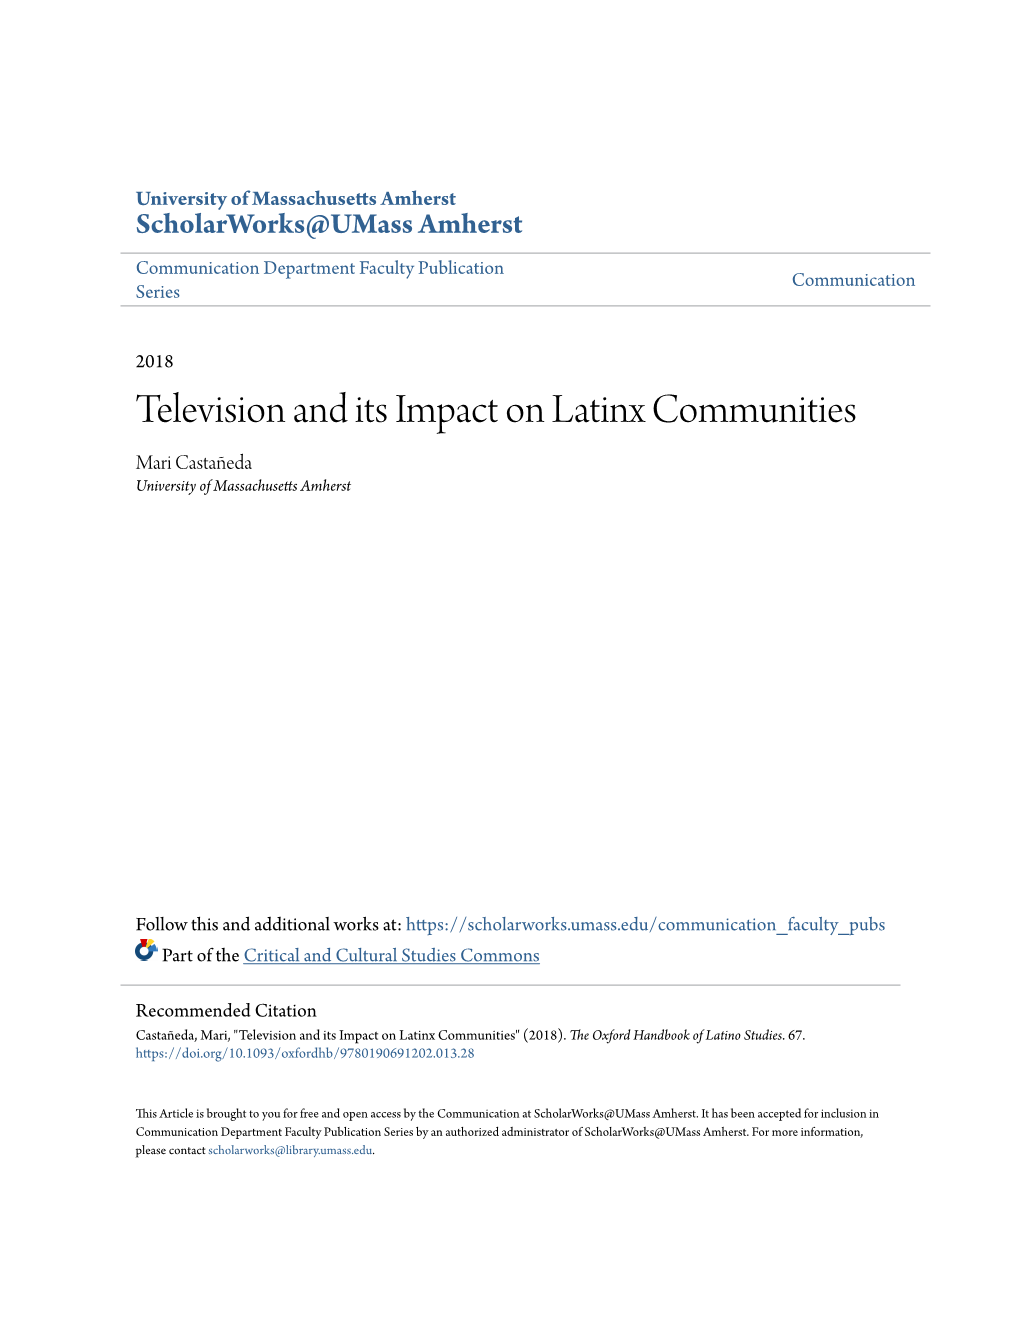 Television and Its Impact on Latinx Communities Mari Castañeda University of Massachusetts Amherst